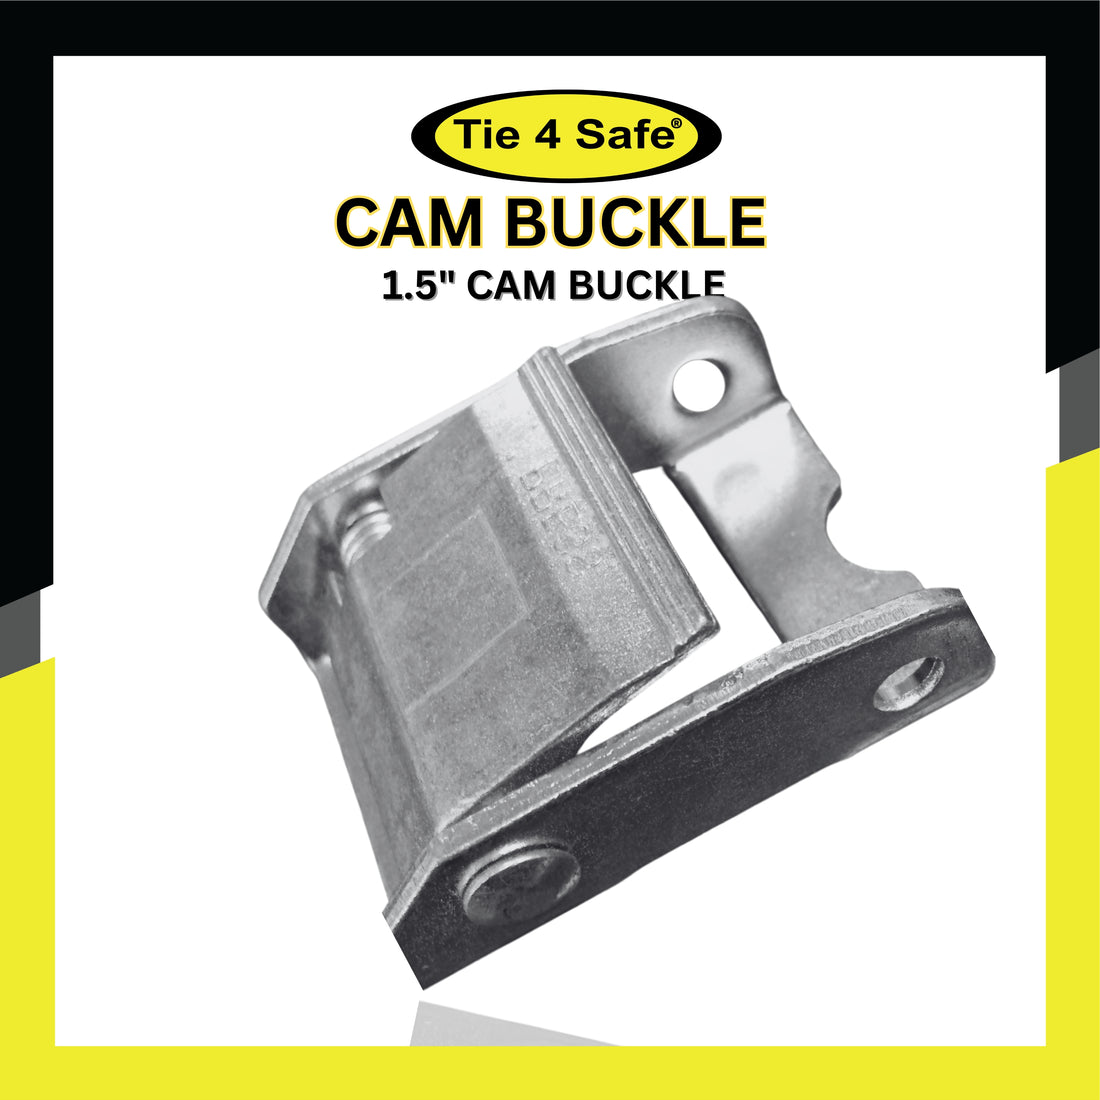 1.5" Cam Buckle - CB10-735